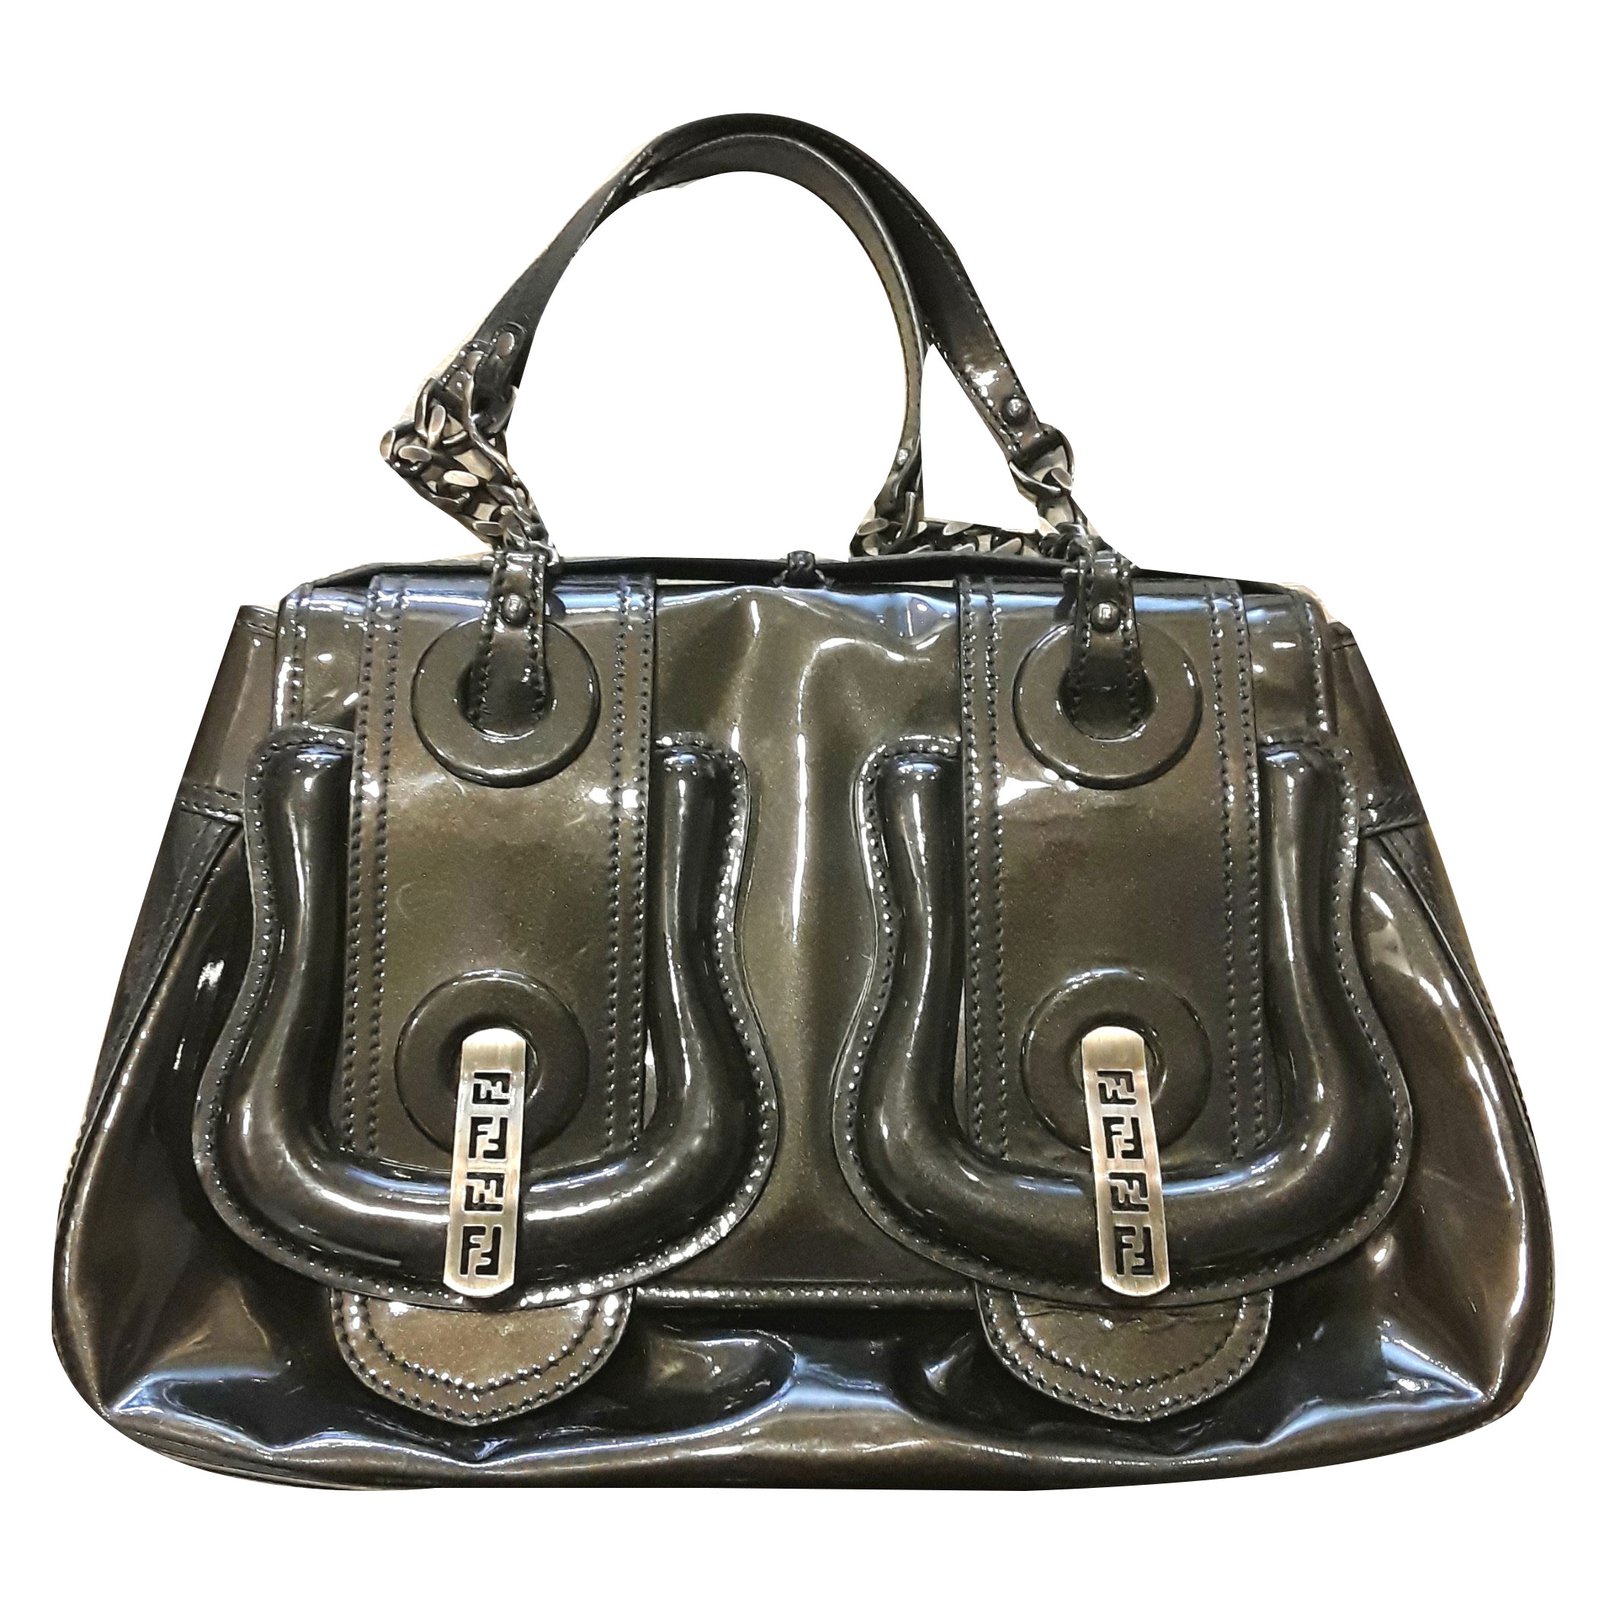 Fendi B Bag Handbags Patent leather 